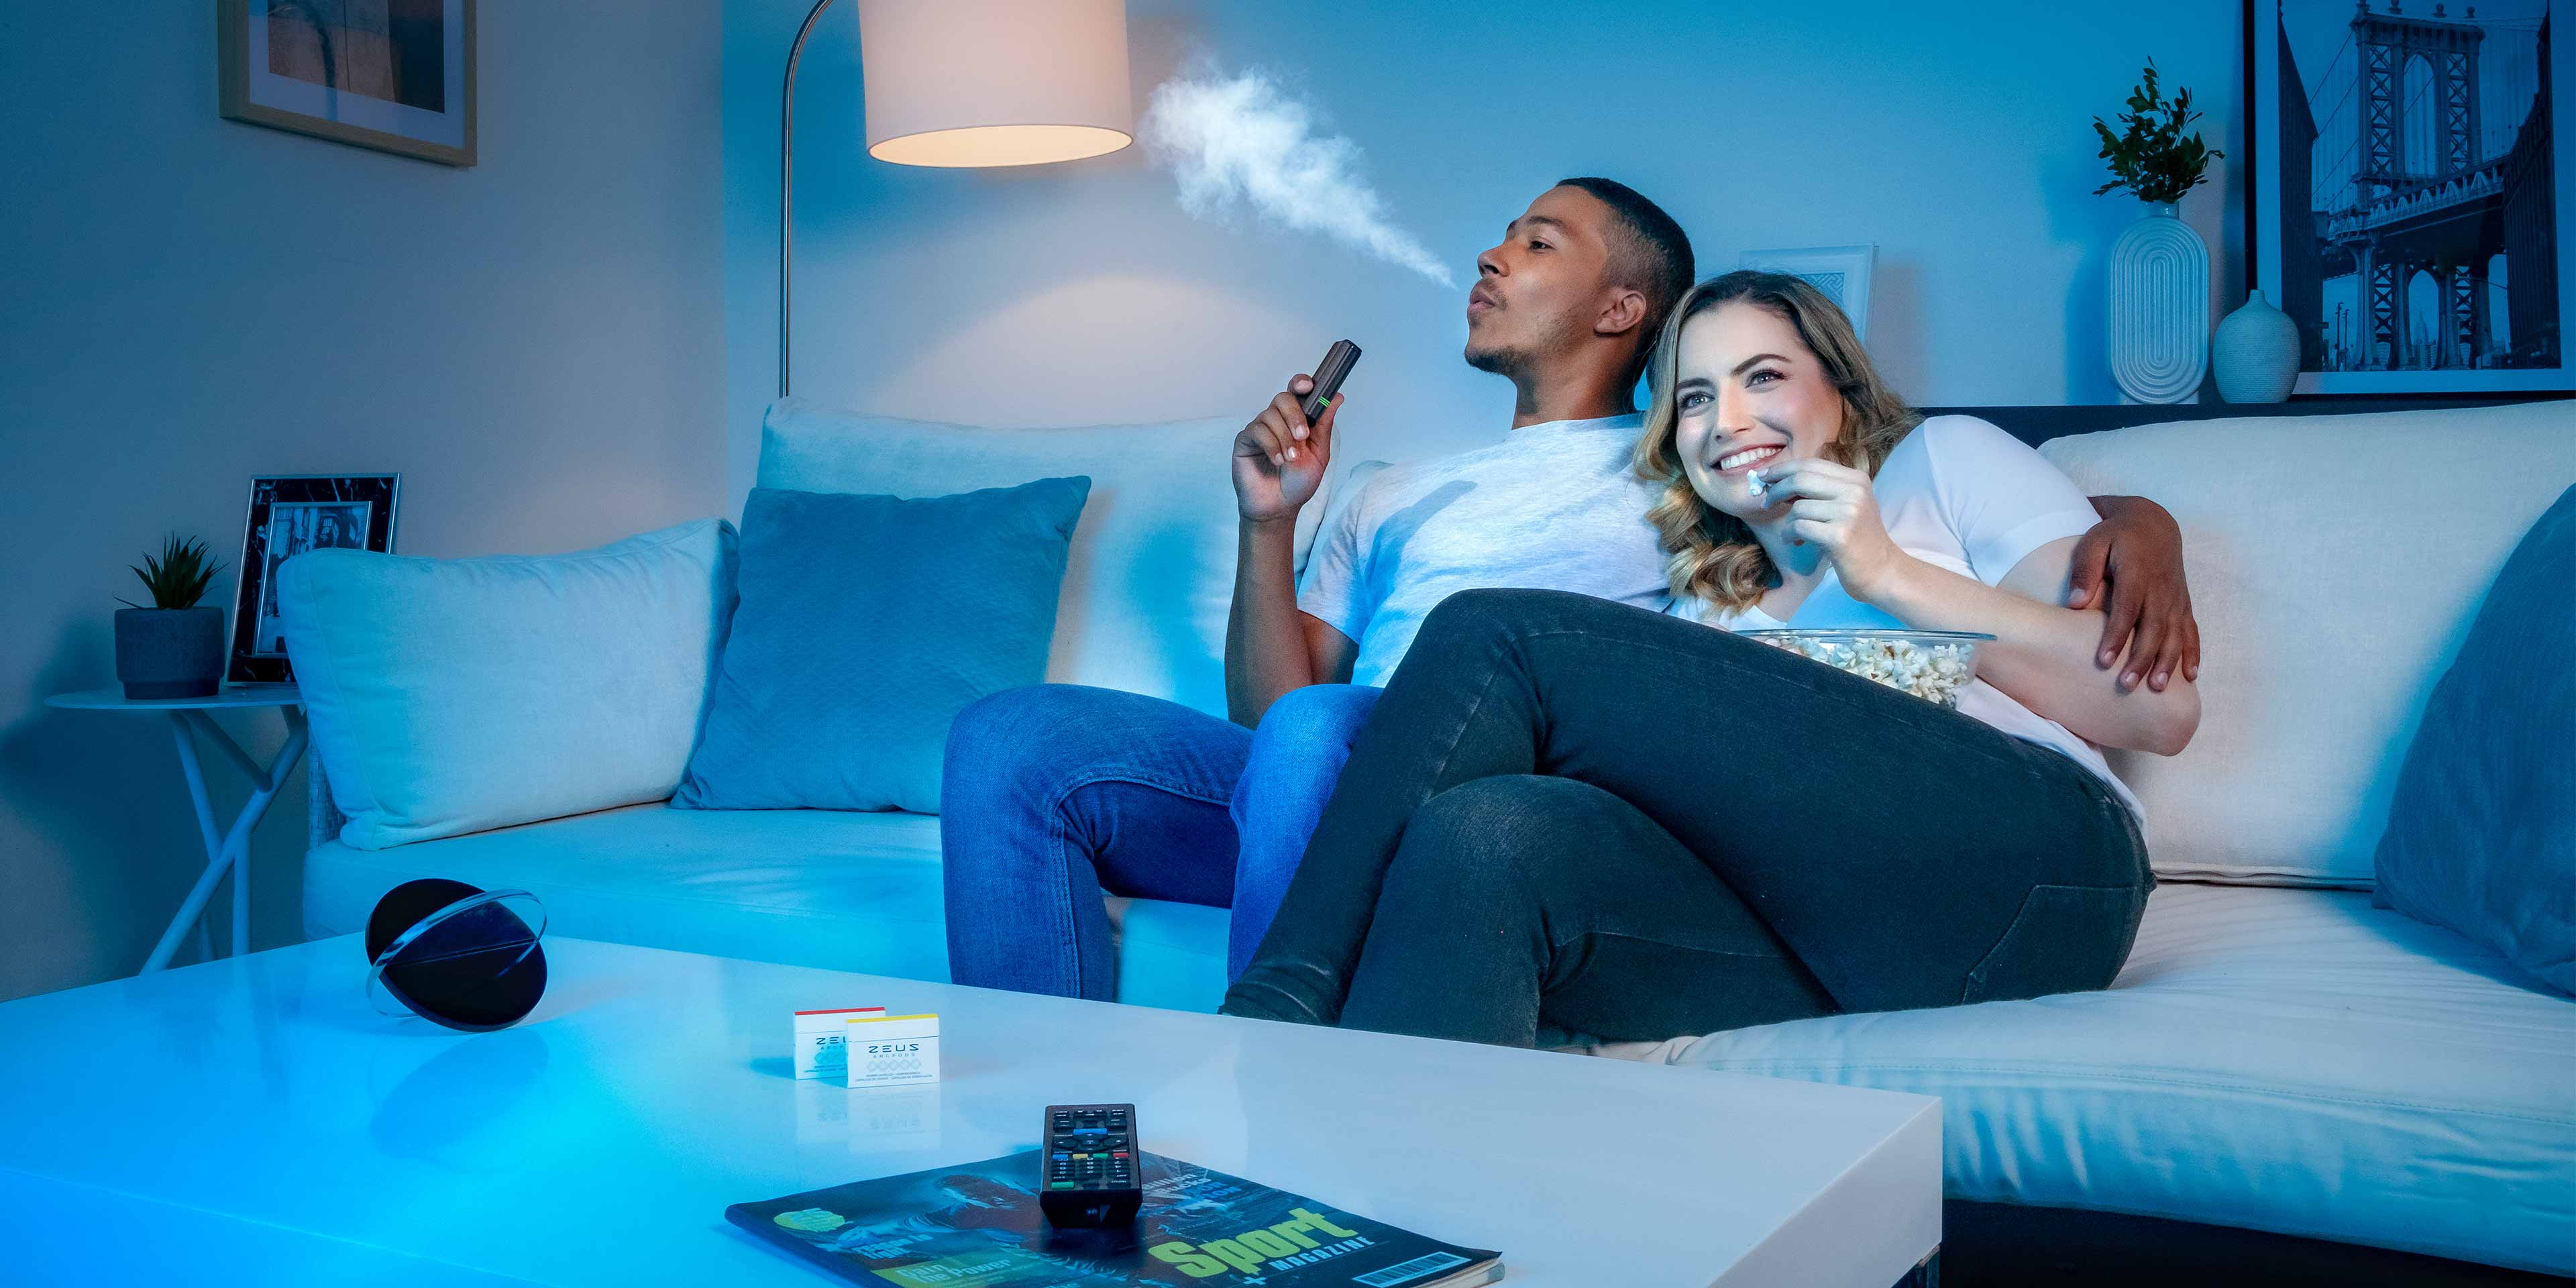 A couple enjoys their Zeus Arc S while binging their favorite show on Netflix.